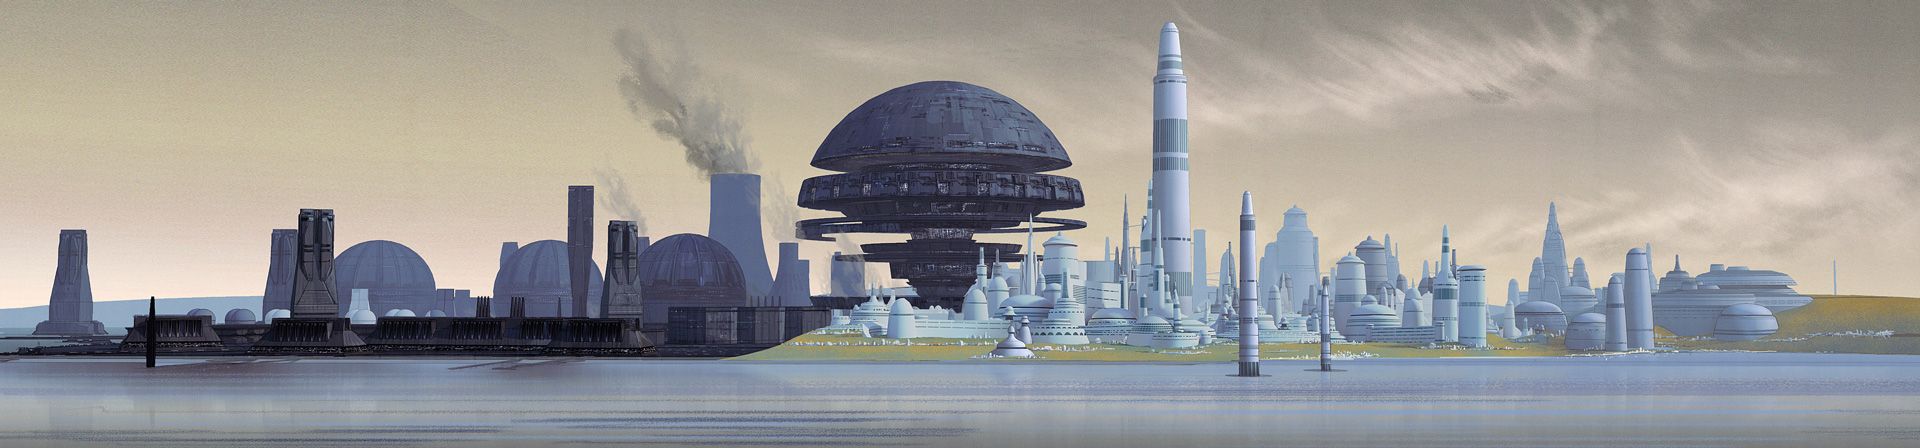 Star Wars Rebel Imperial City Concept Art